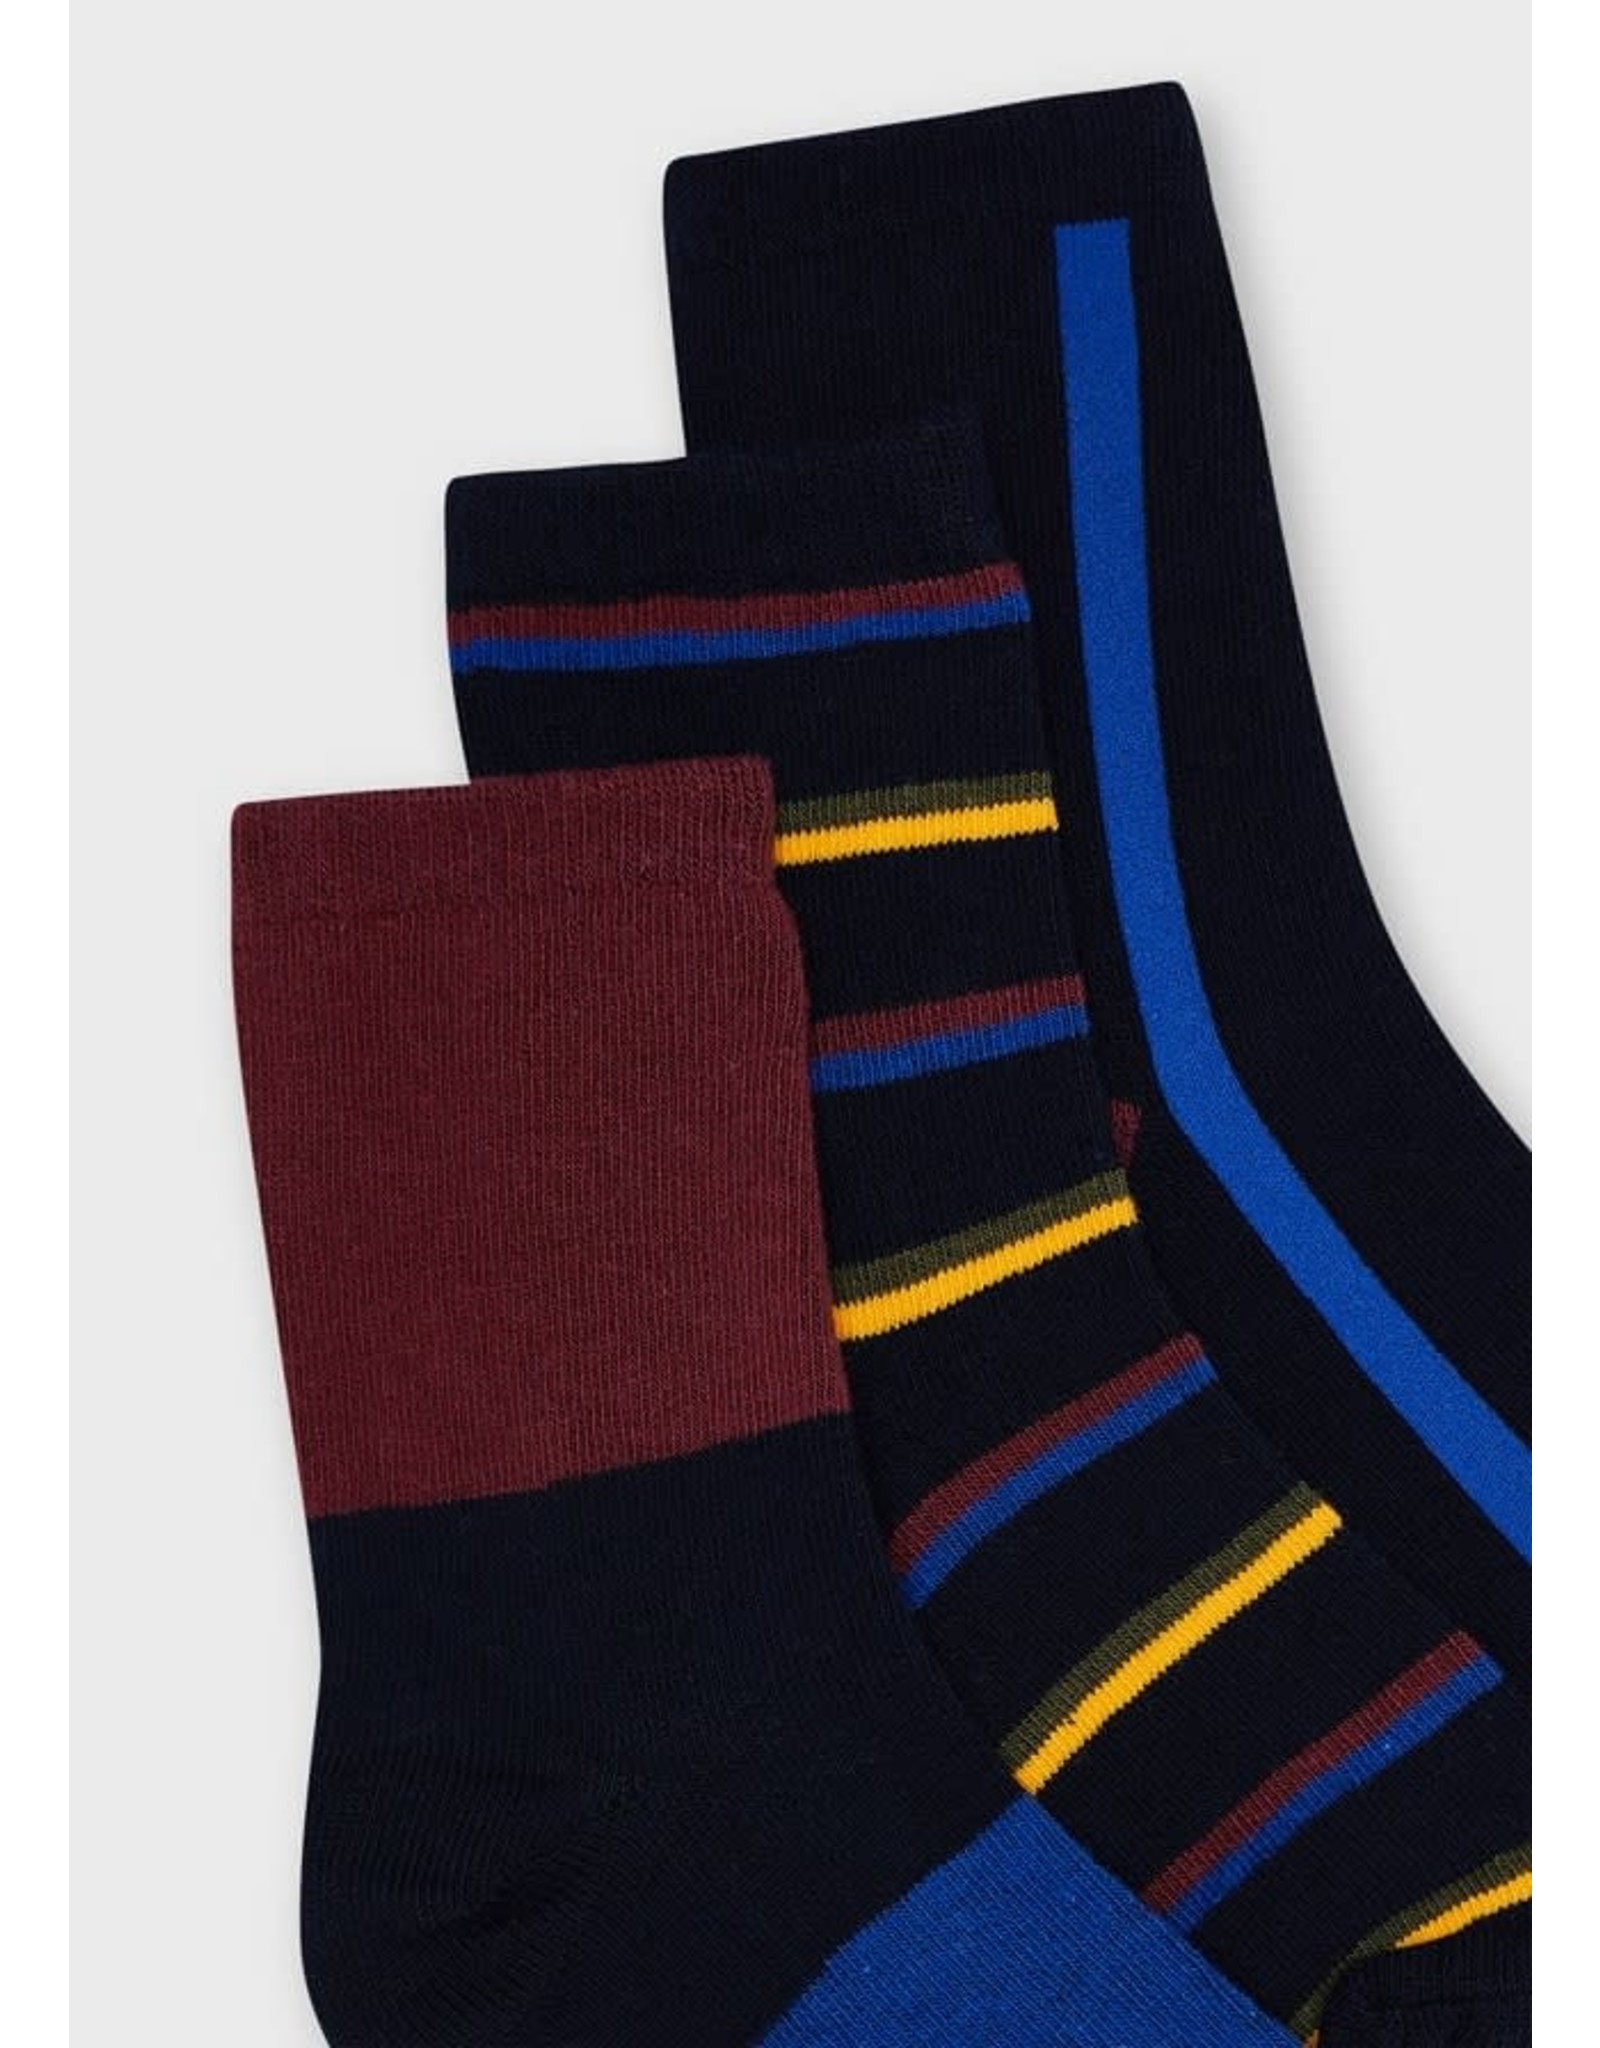 Mayoral Maroon Striped Socks Set (2 pairs)